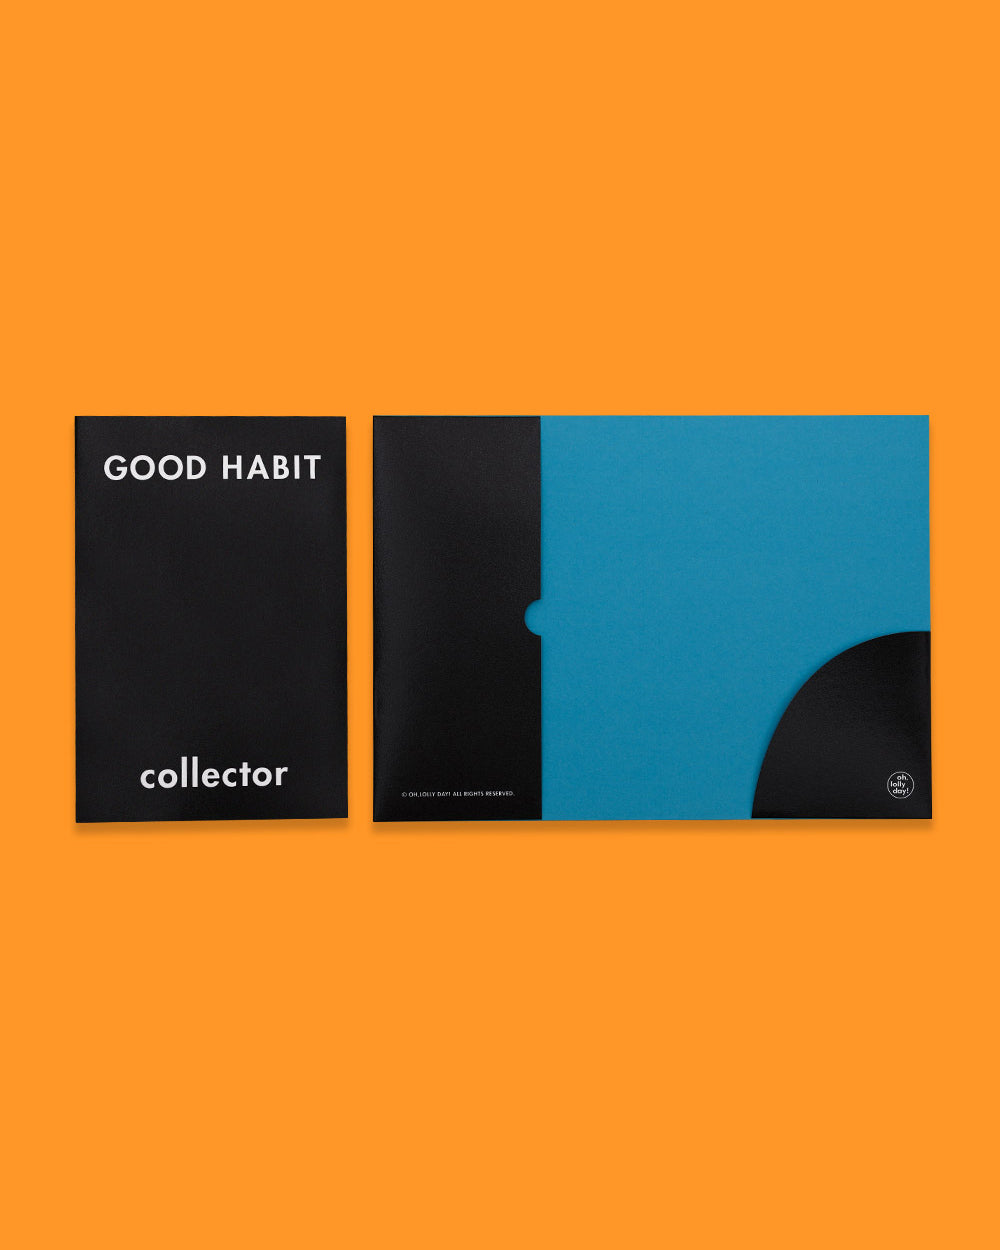 [File] Good habit collector_mini